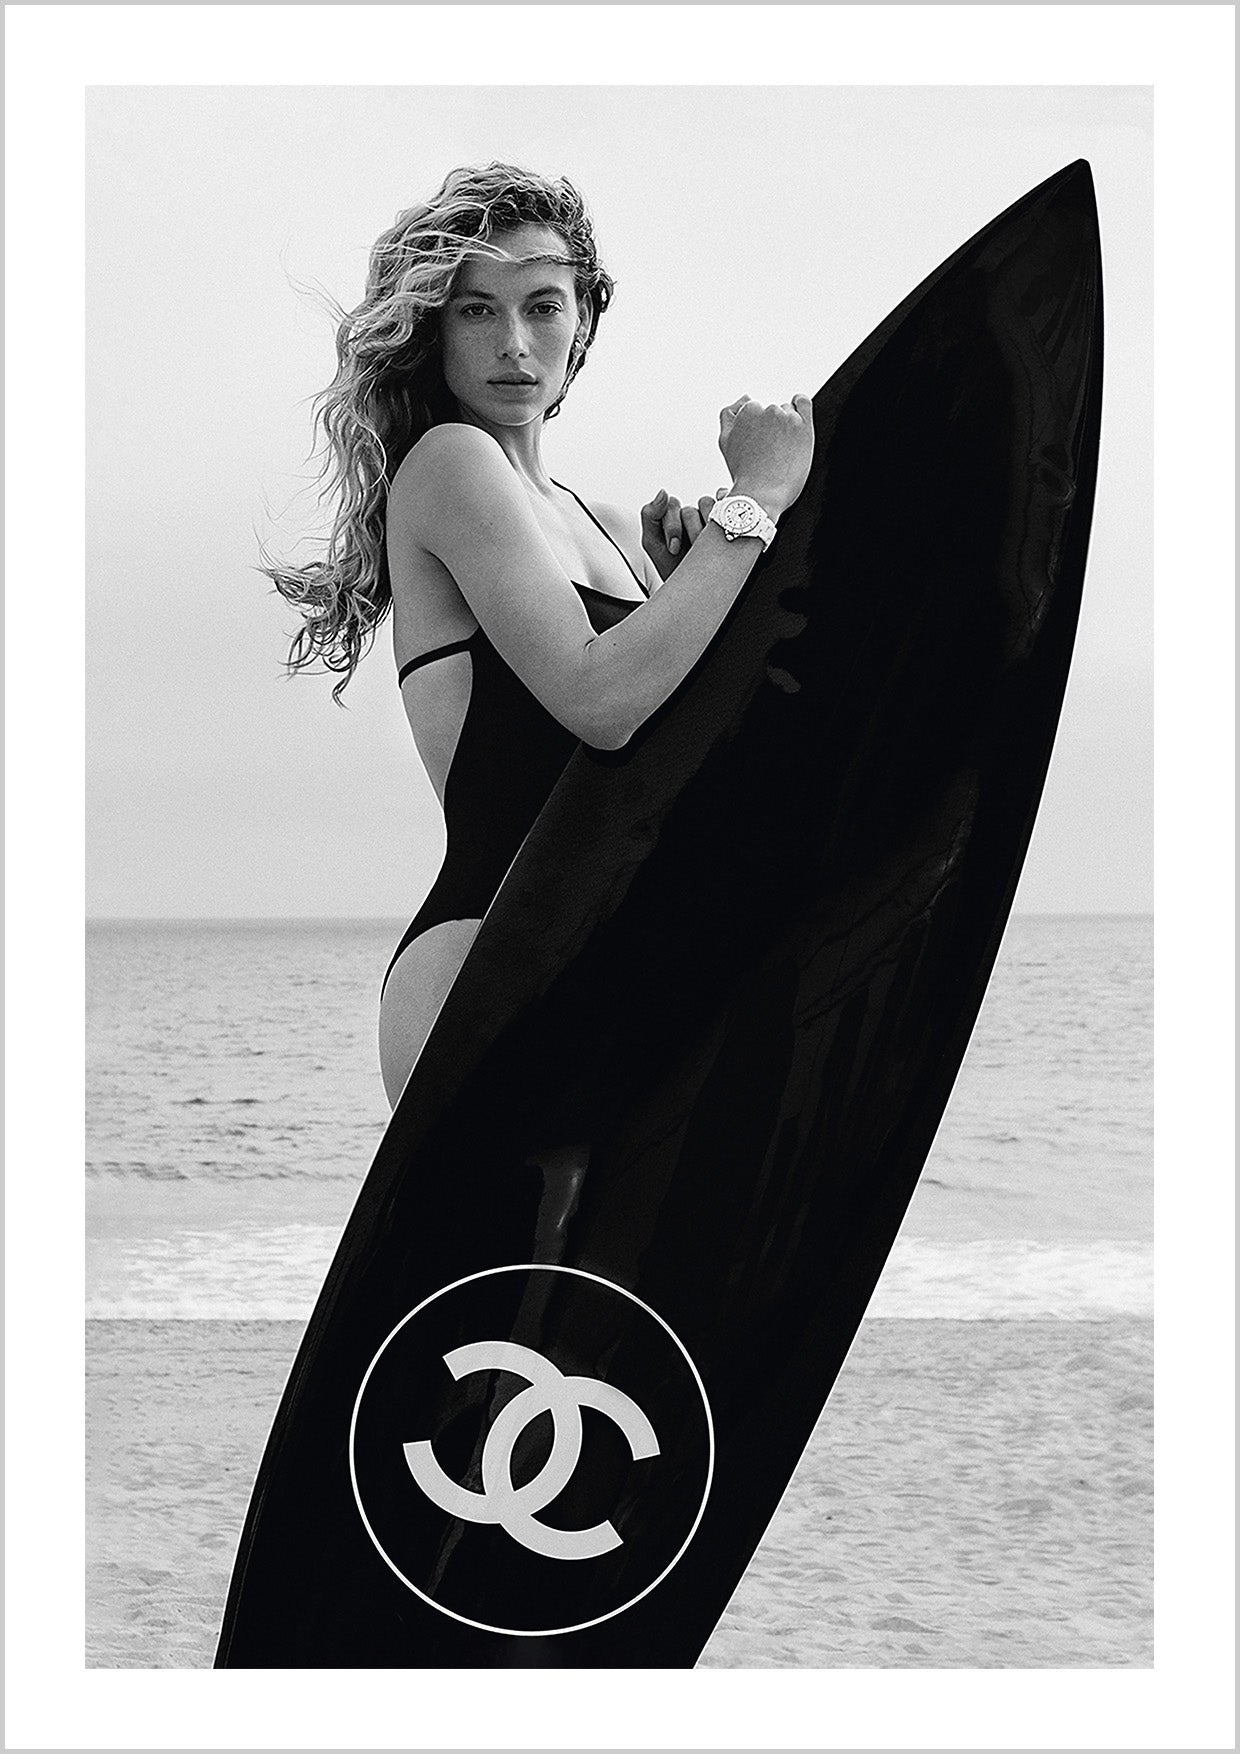 Chanel Surfboard Framed Print